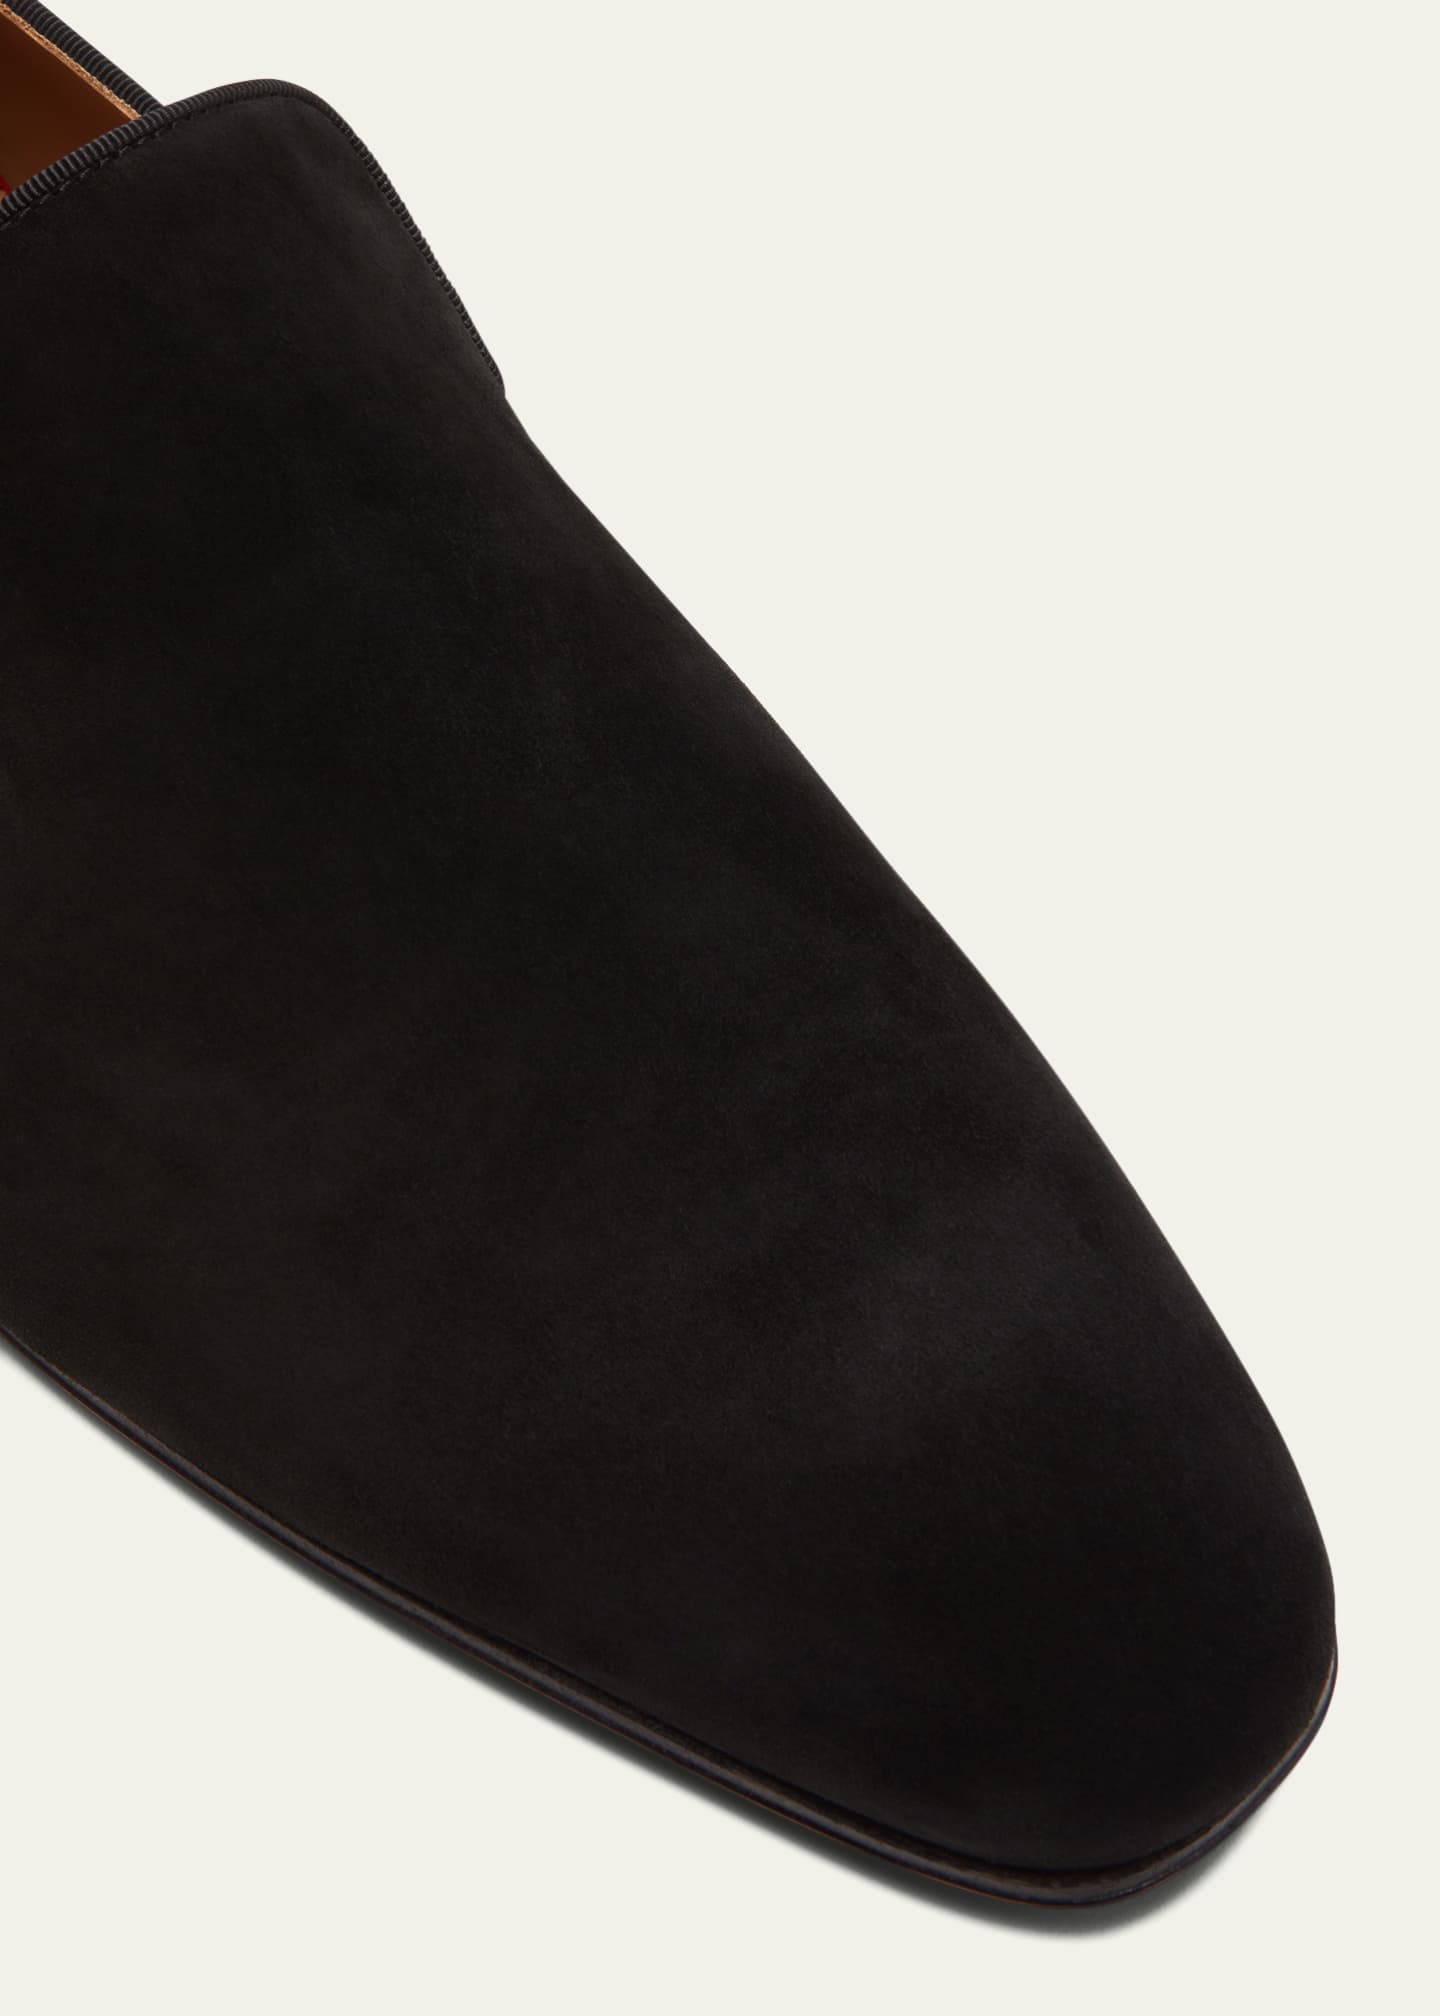 Christian Louboutin Black Dandelion Loafers